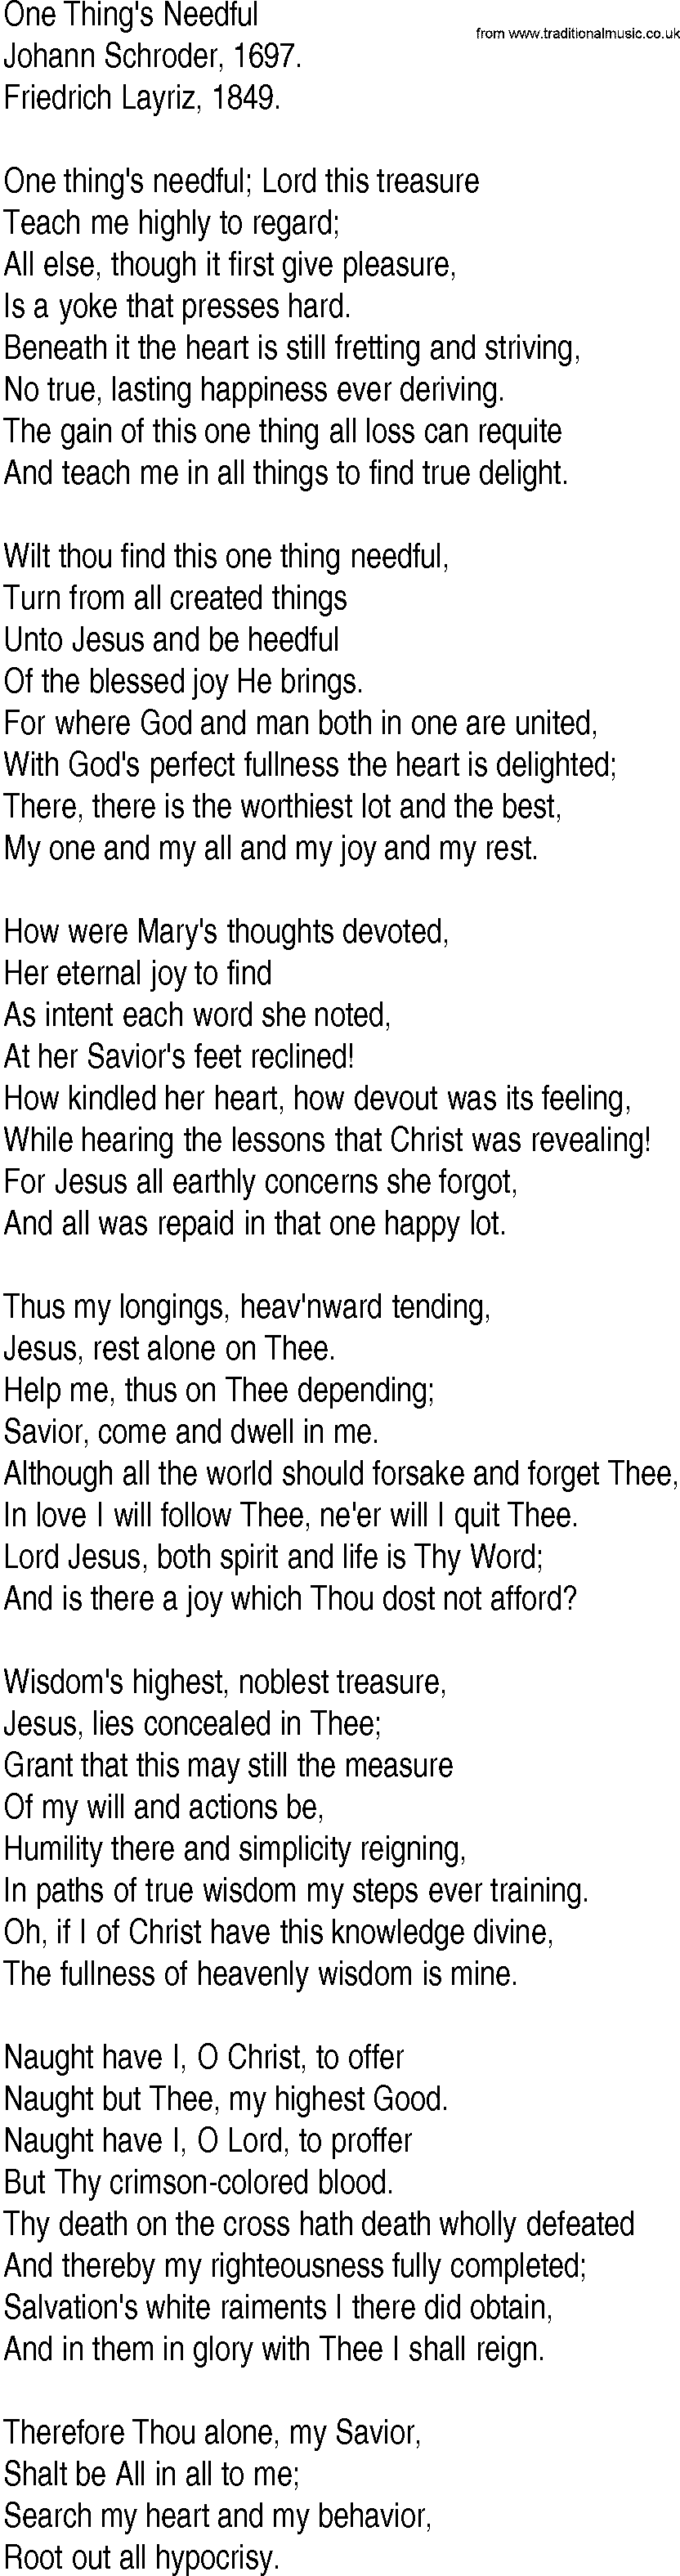 Hymn and Gospel Song: One Thing's Needful by Johann Schroder lyrics